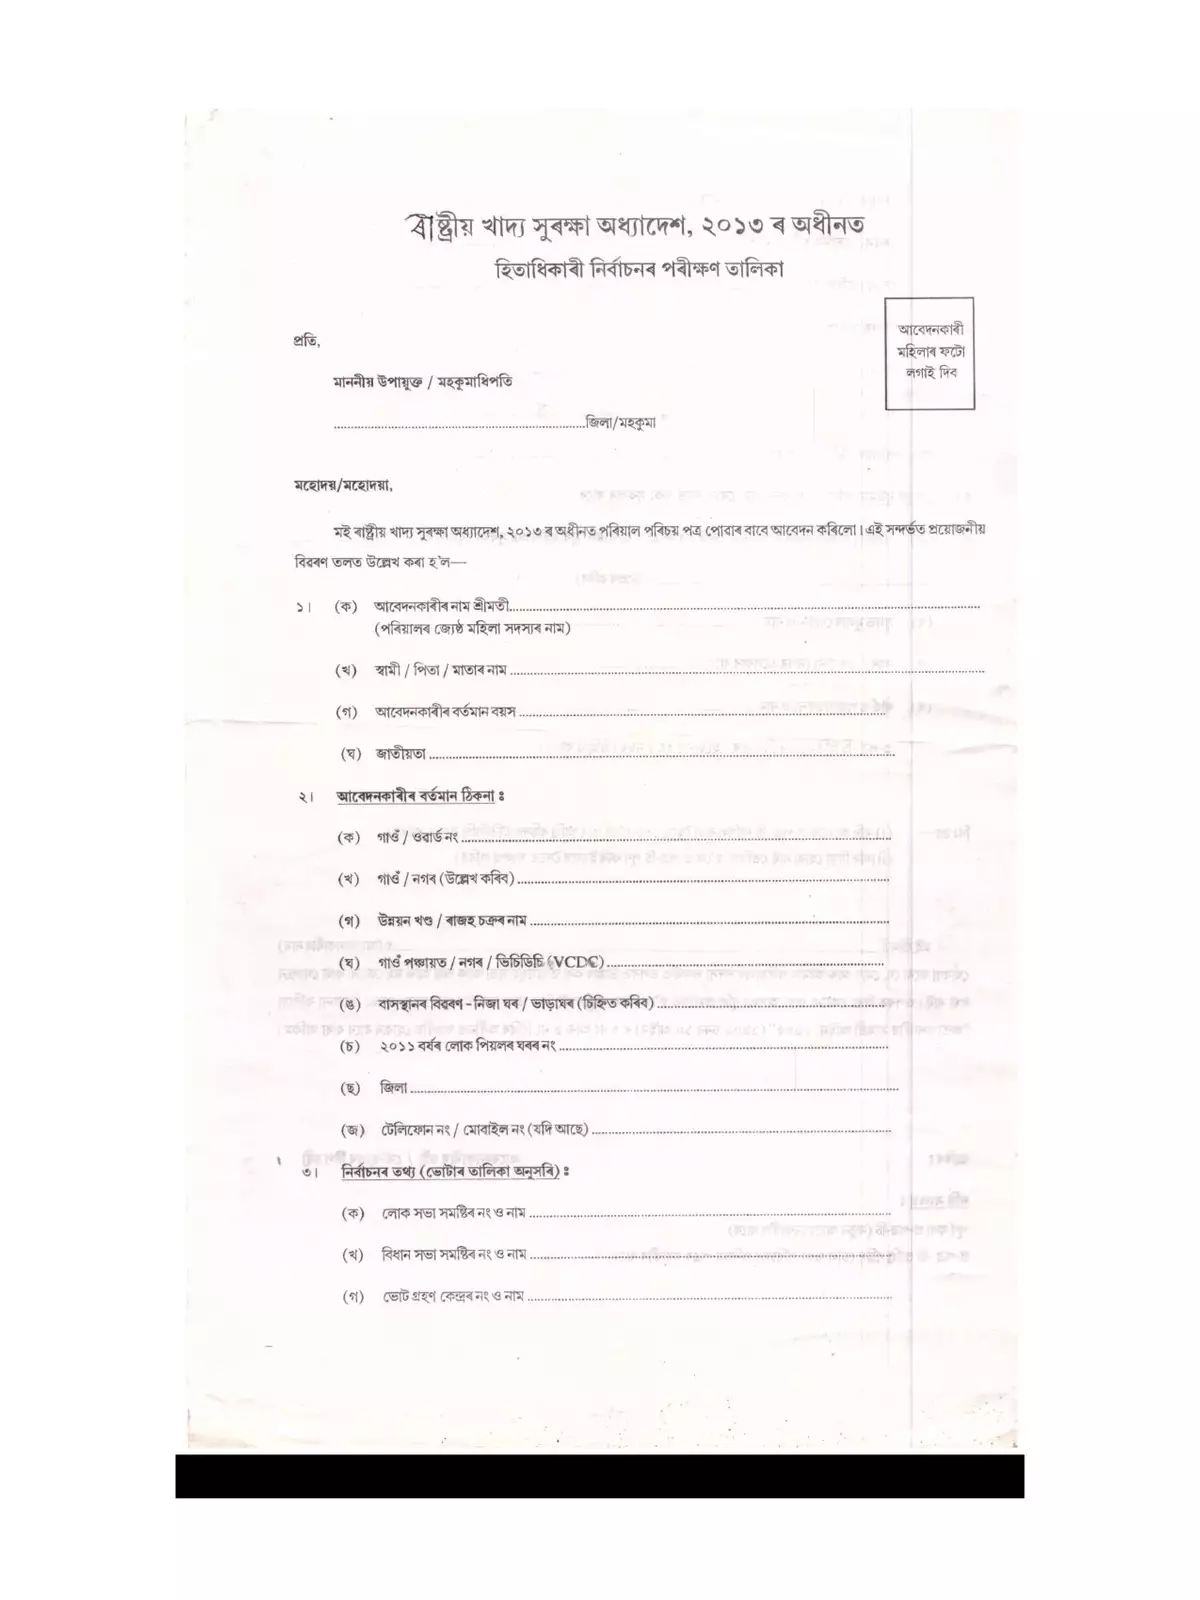 Assam Ration Card Application Form